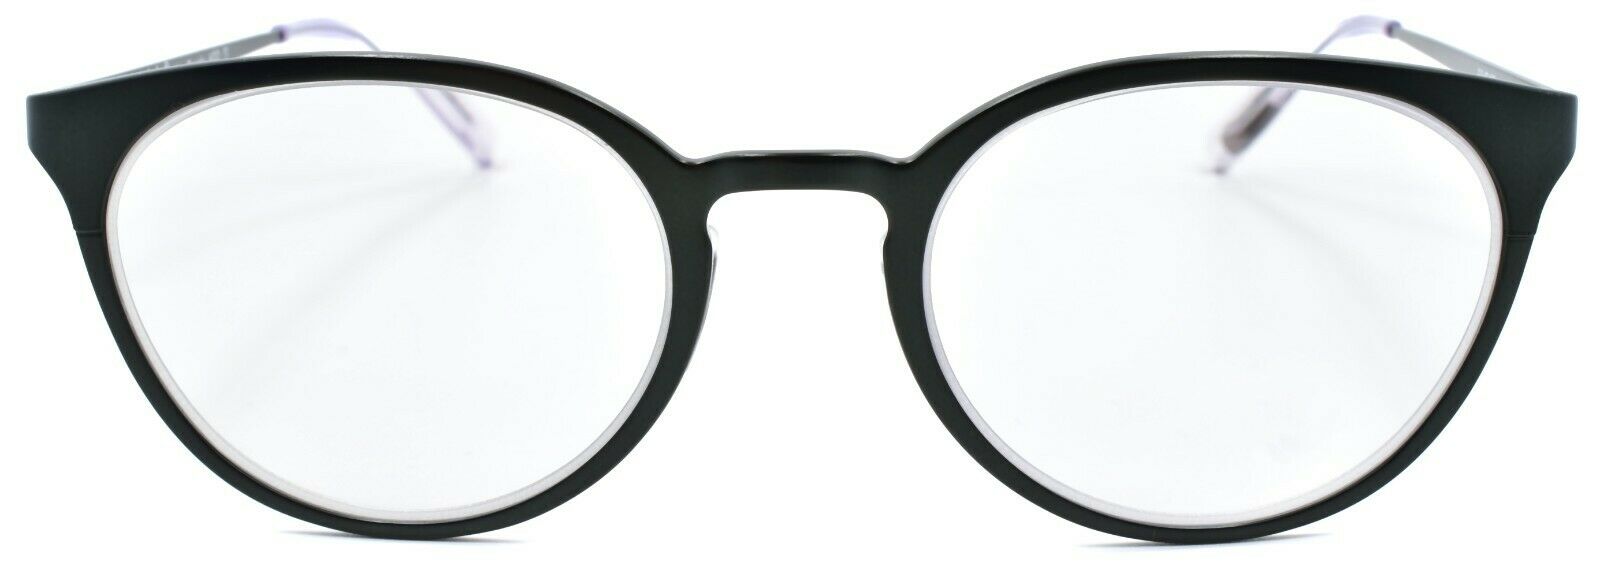 2-Eyebobs Jim Dandy 600 11 Reading Glasses Dark Green +2.00-842754138079-IKSpecs